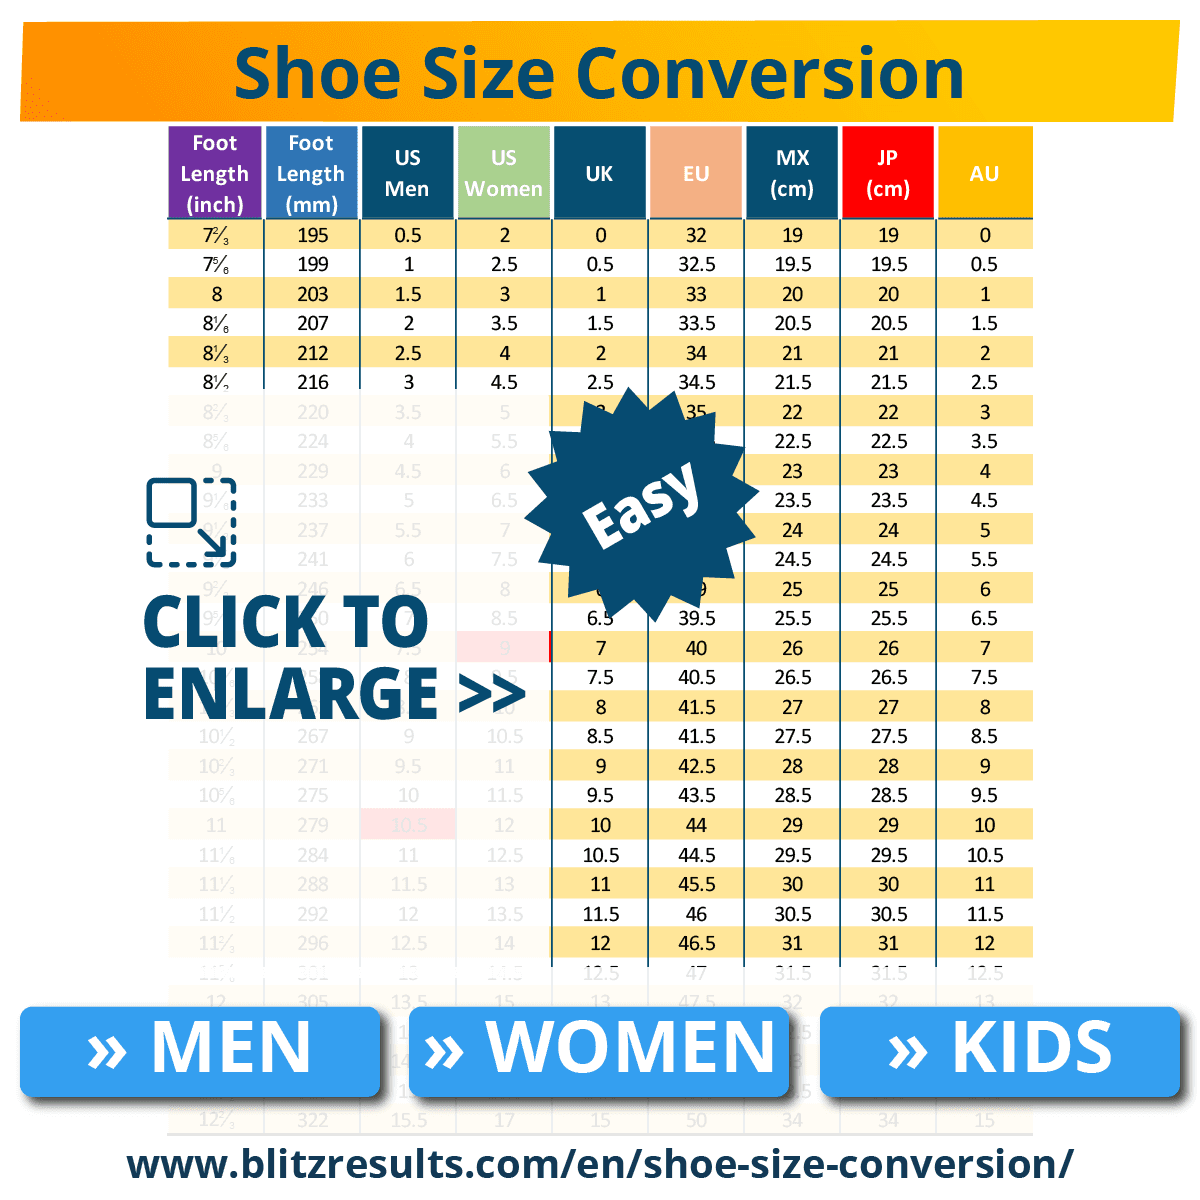 baby shoe sizes in cm